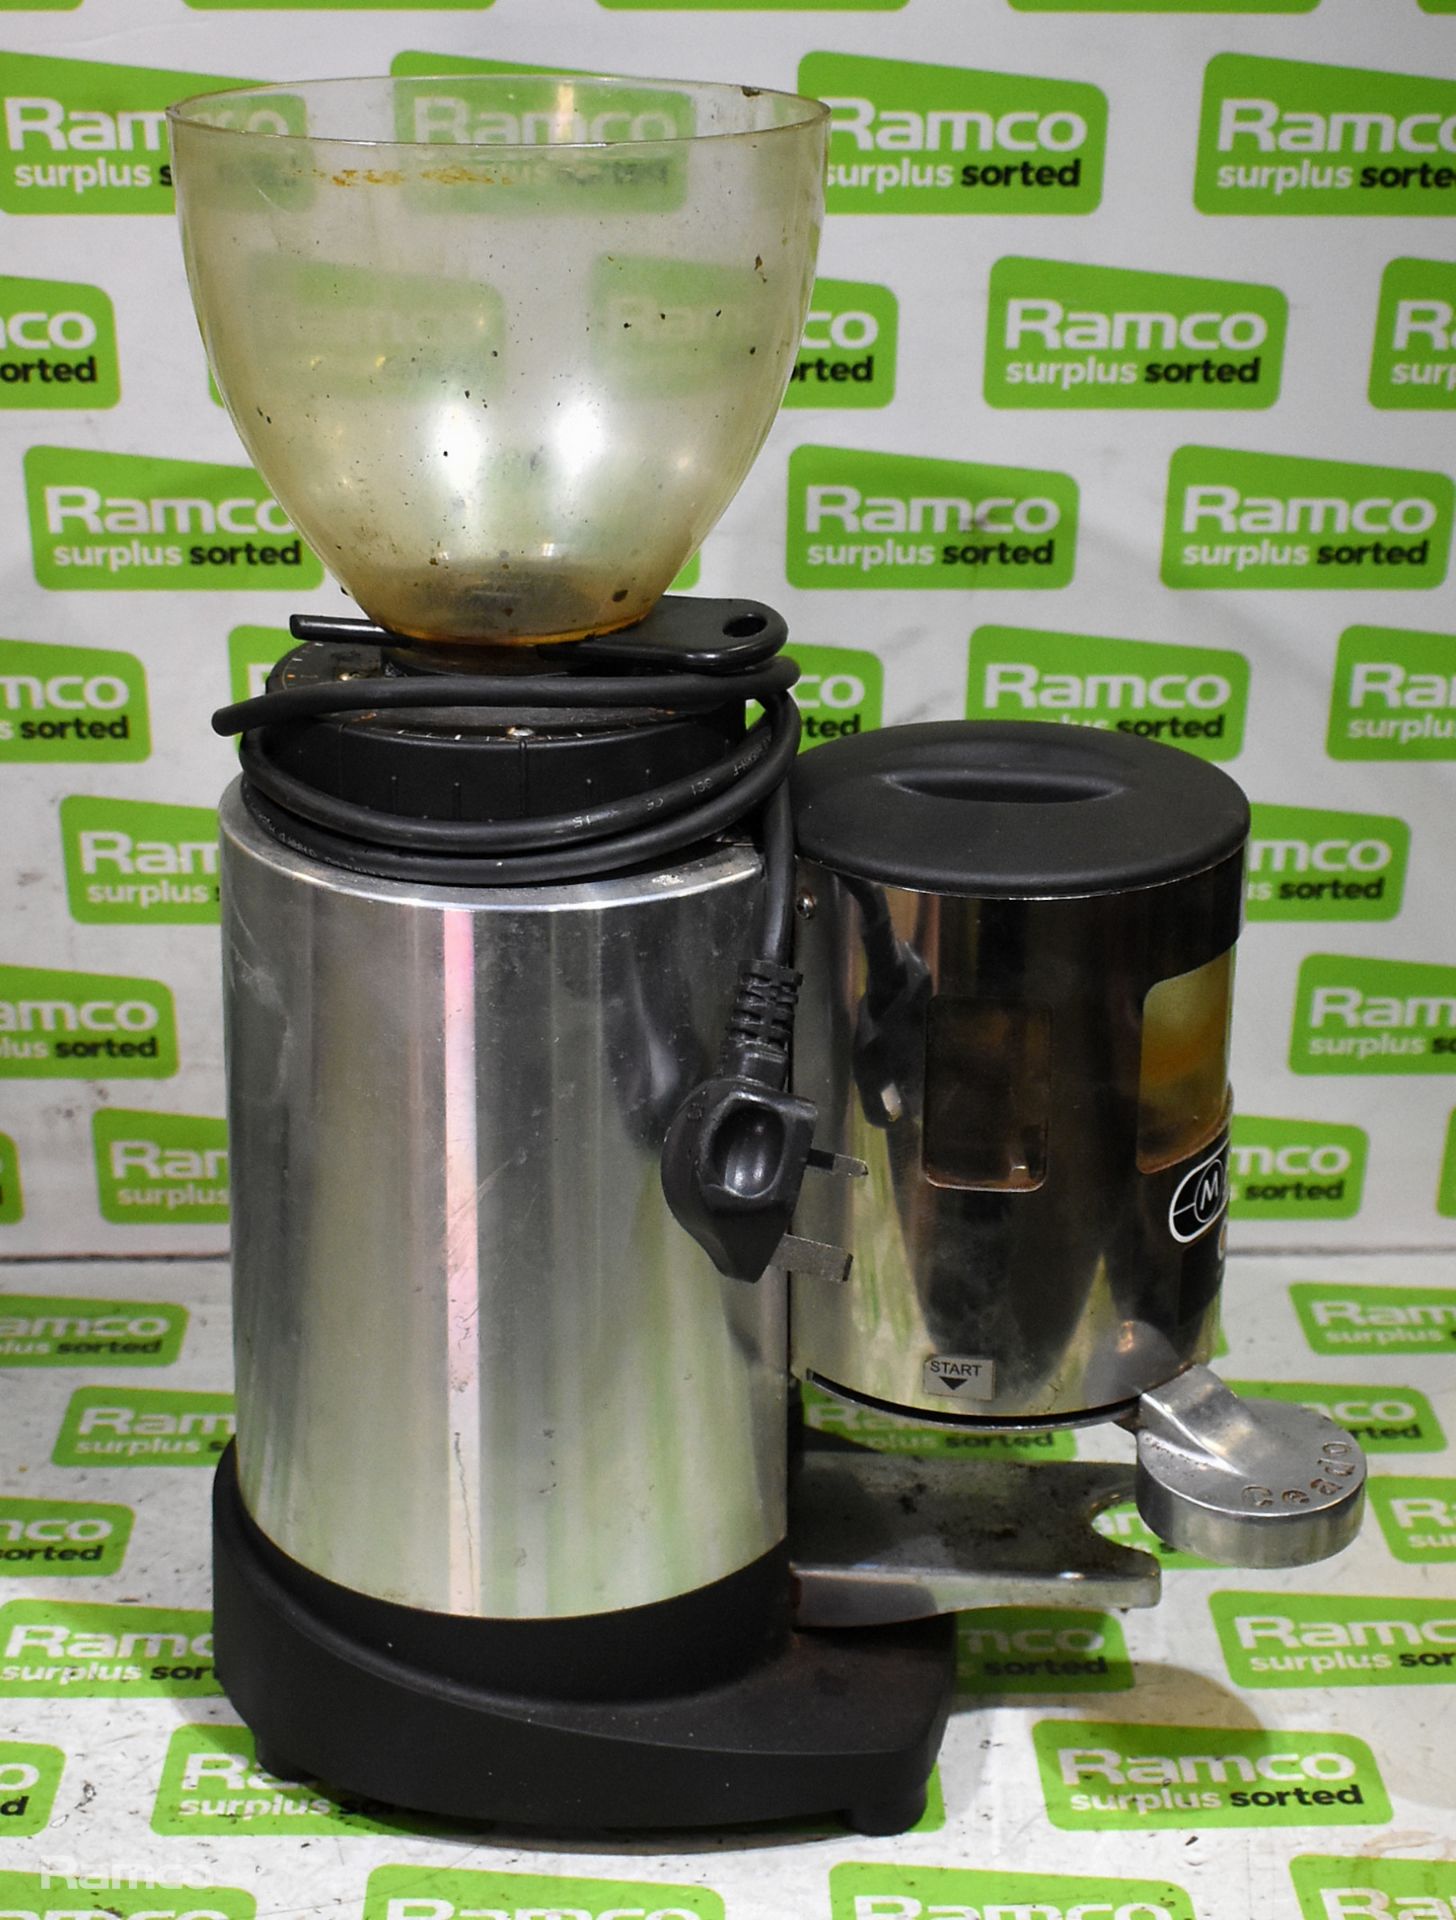 2x Ceado E6X espresso coffee grinders - Image 4 of 10